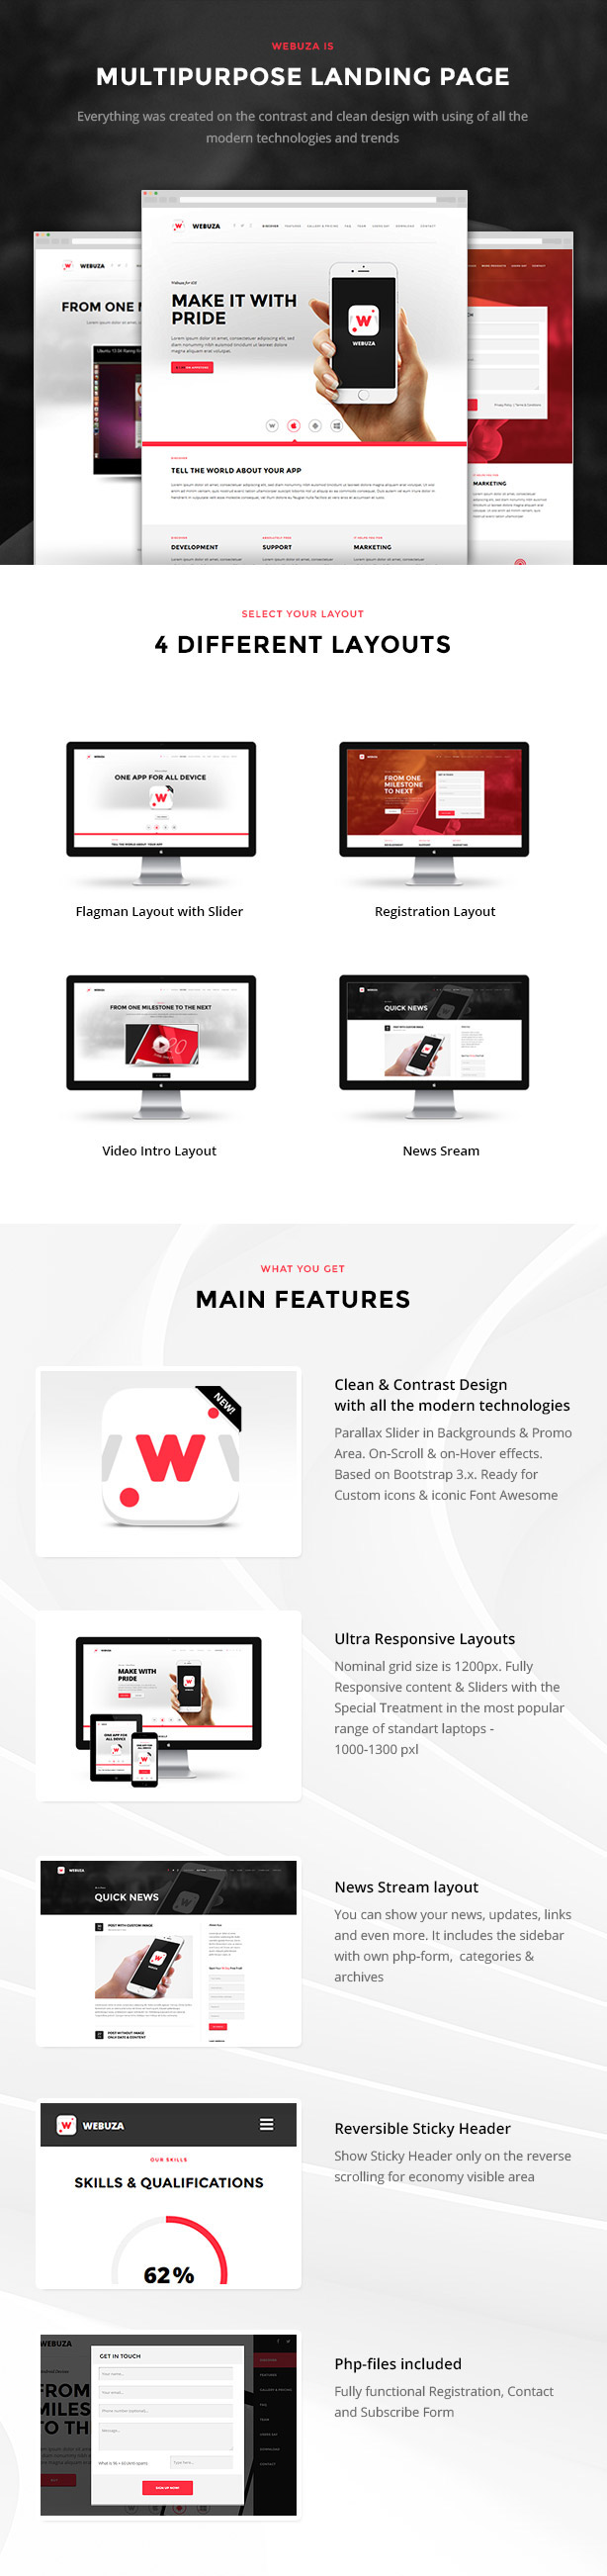 webuza themeforest template web-design marketing   landing page